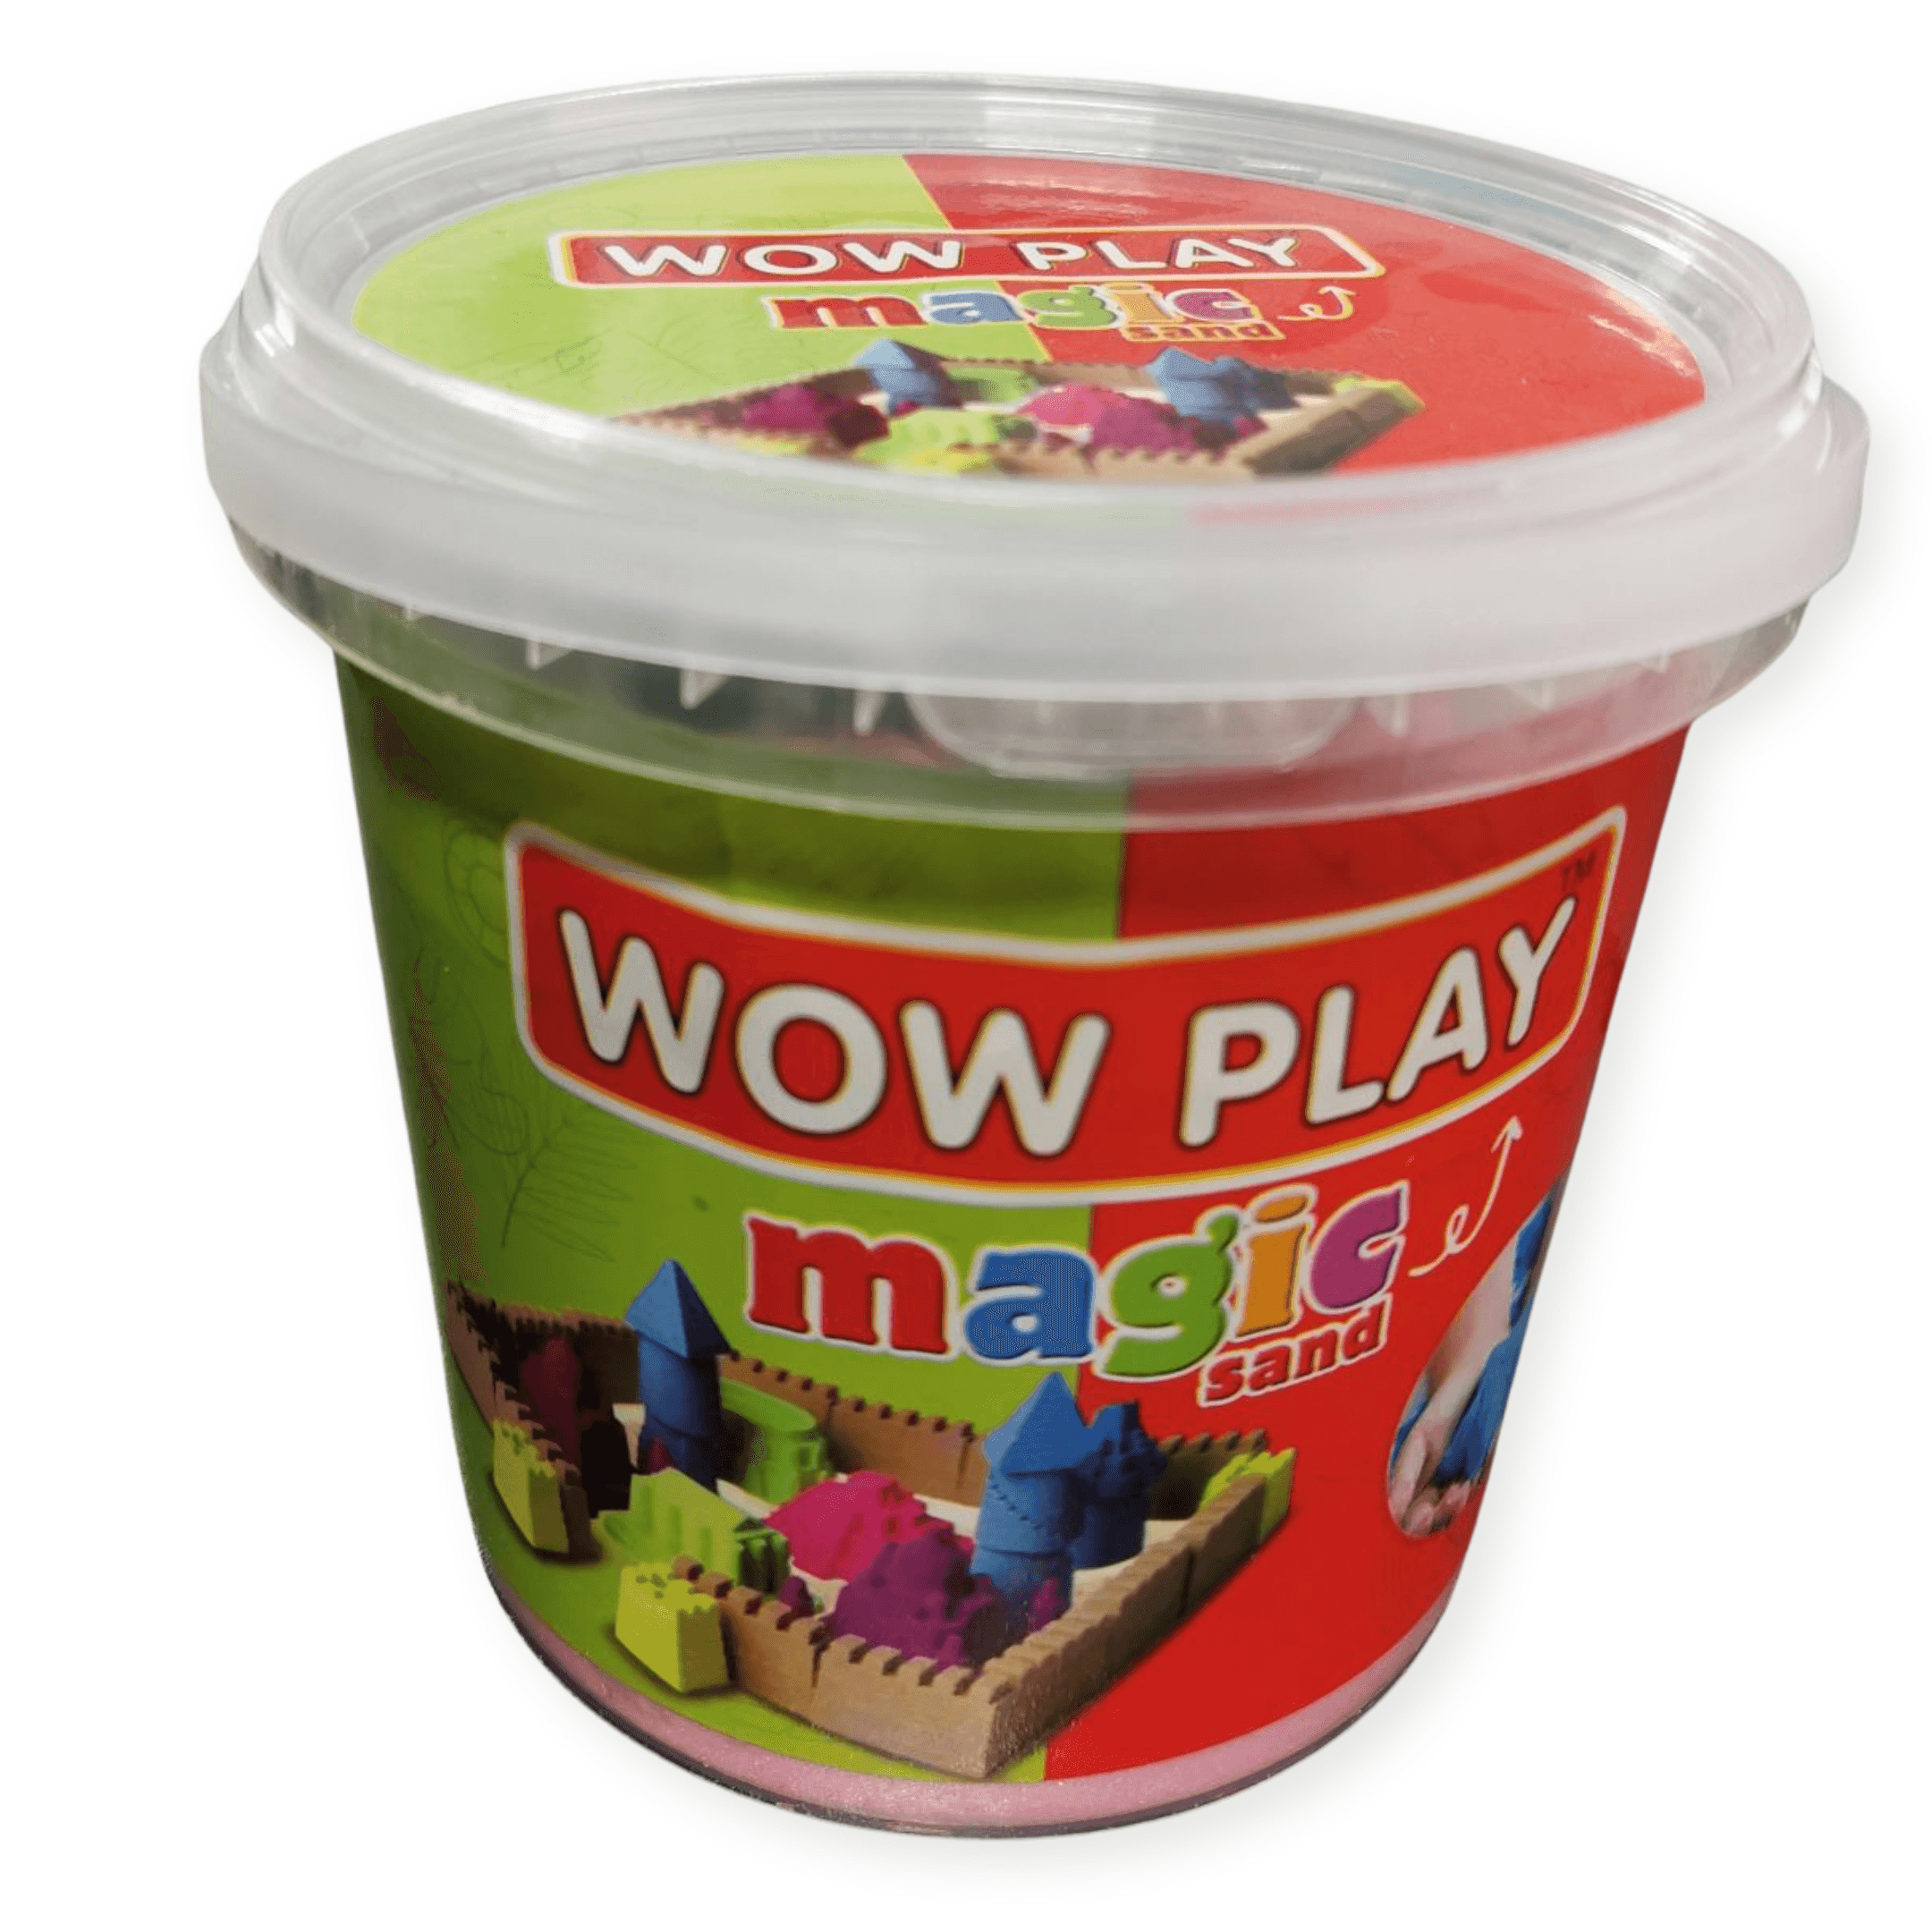 Wow Play Magic Sand Big Play Set - BumbleToys - 5-7 Years, Arabic Triangle Trading, Boys, Girls, Make & Create